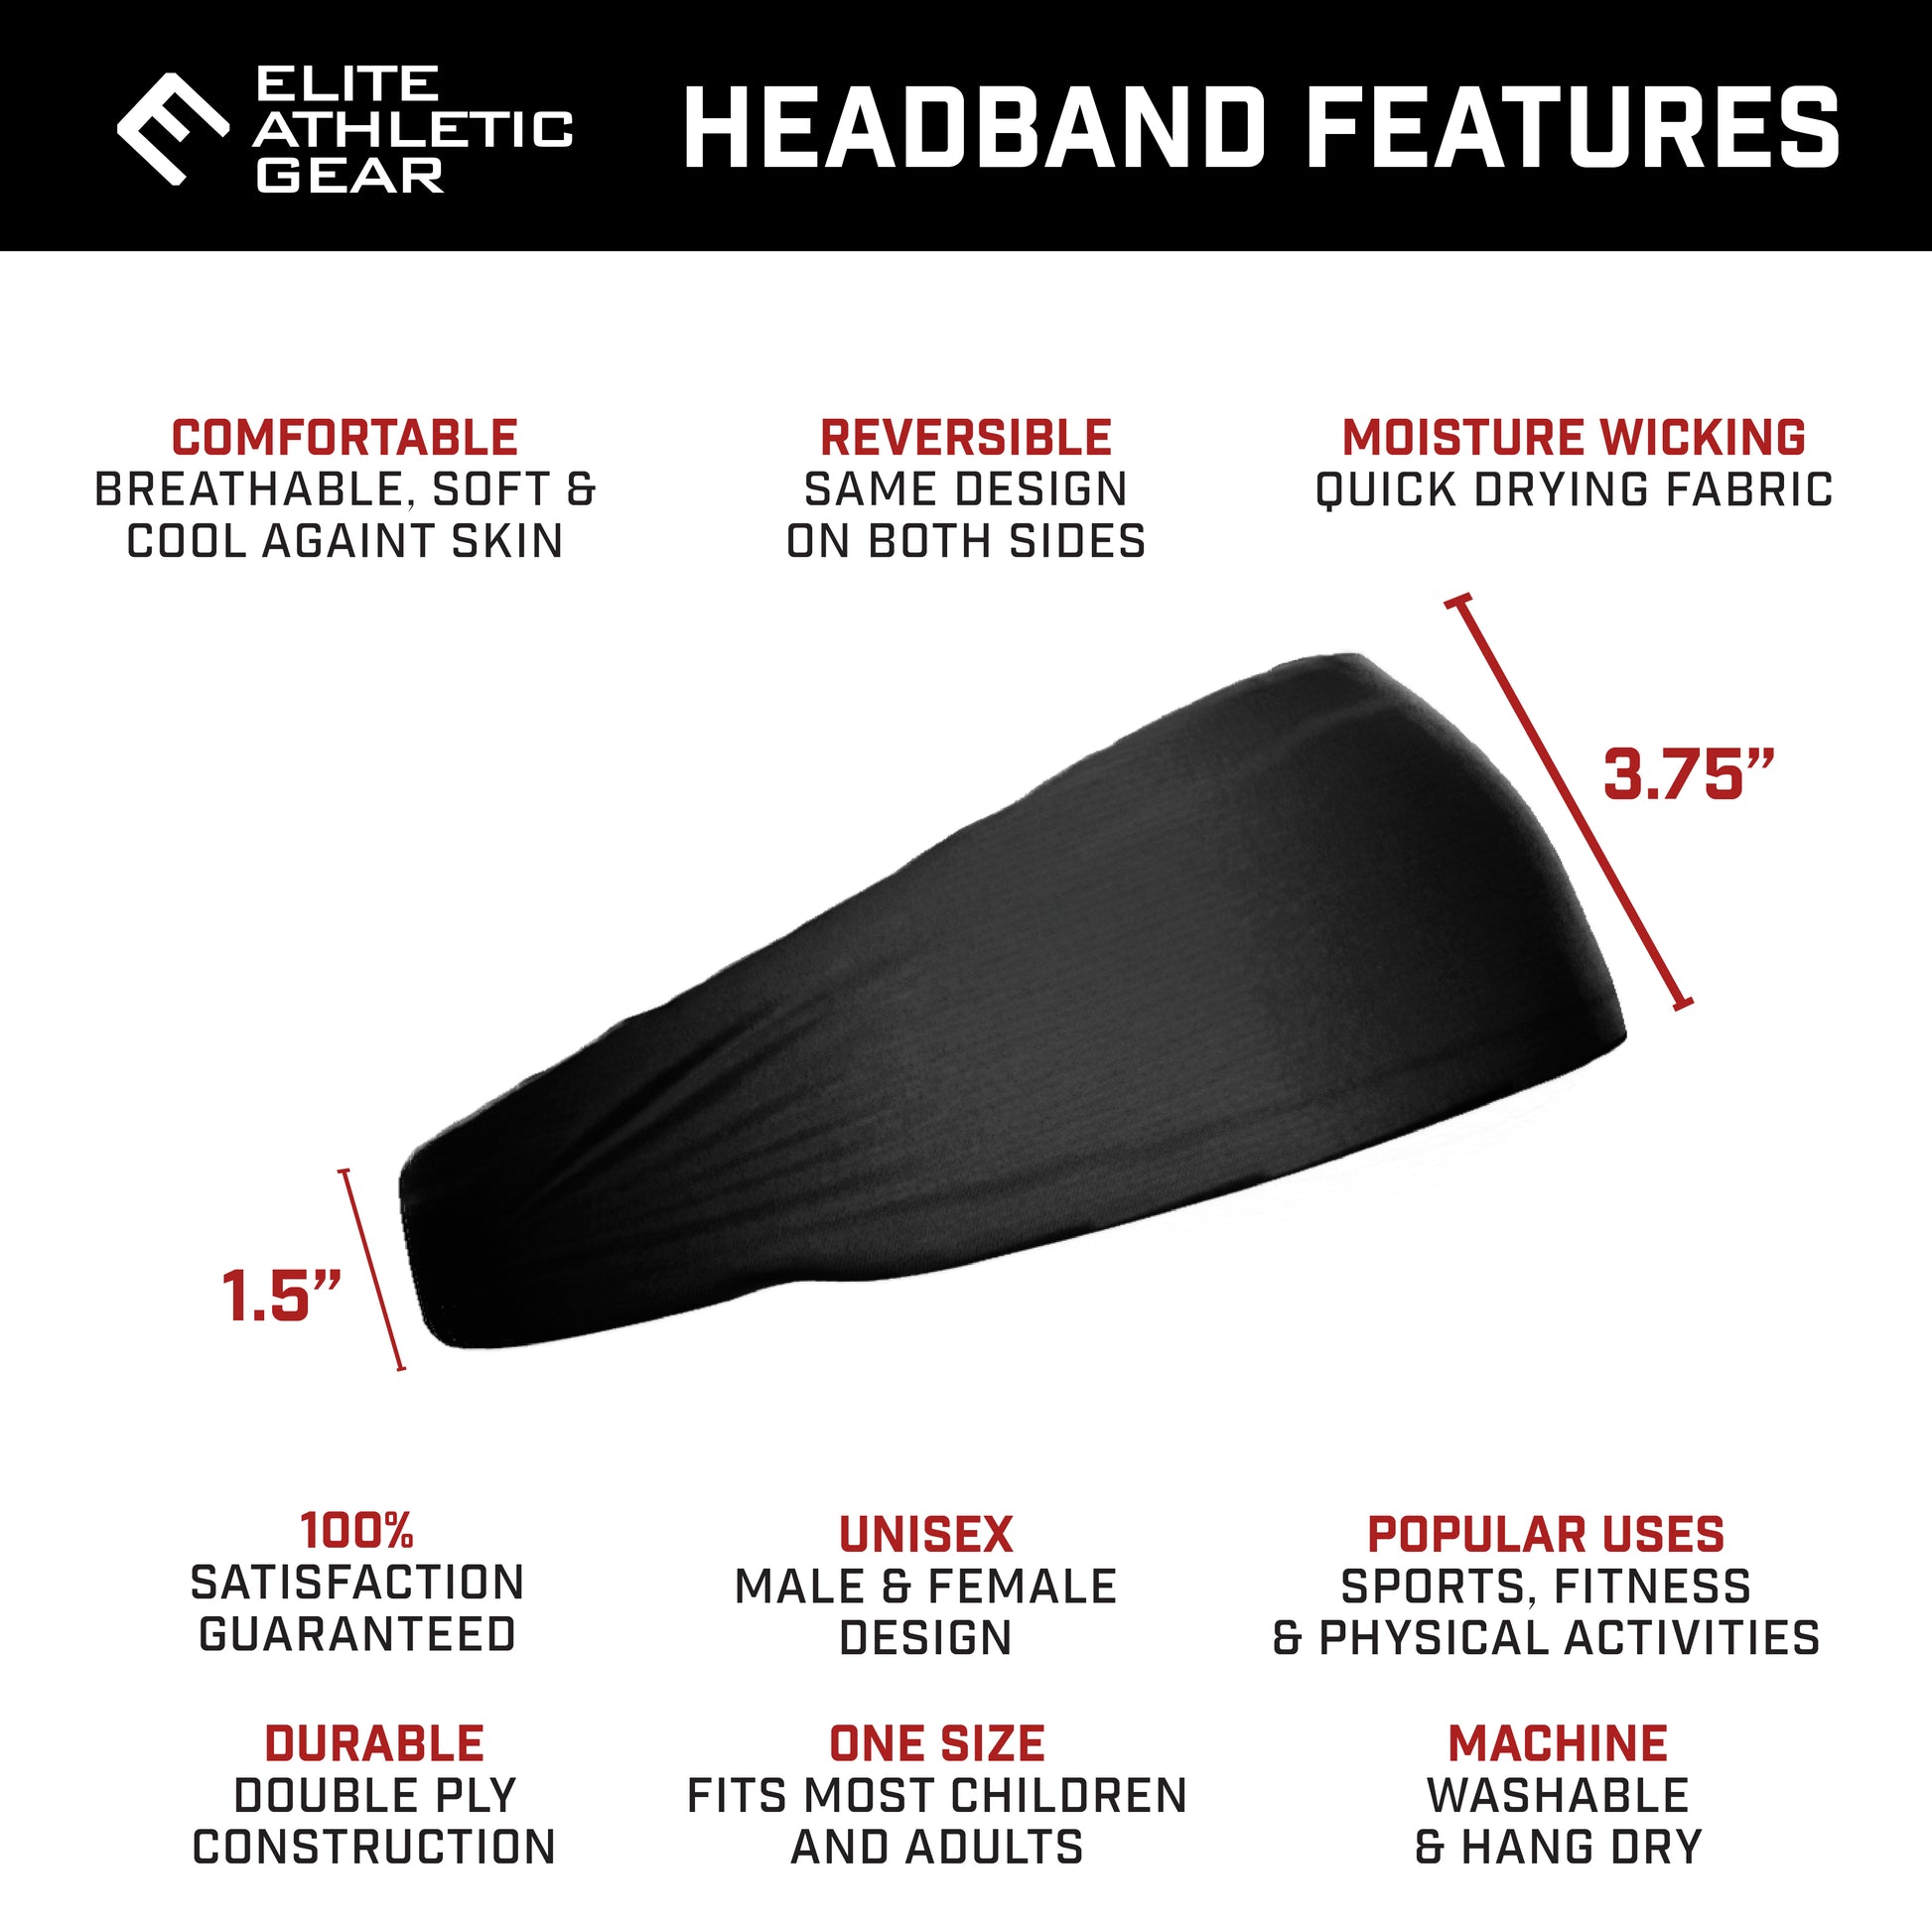 GOAT Headband (Black)